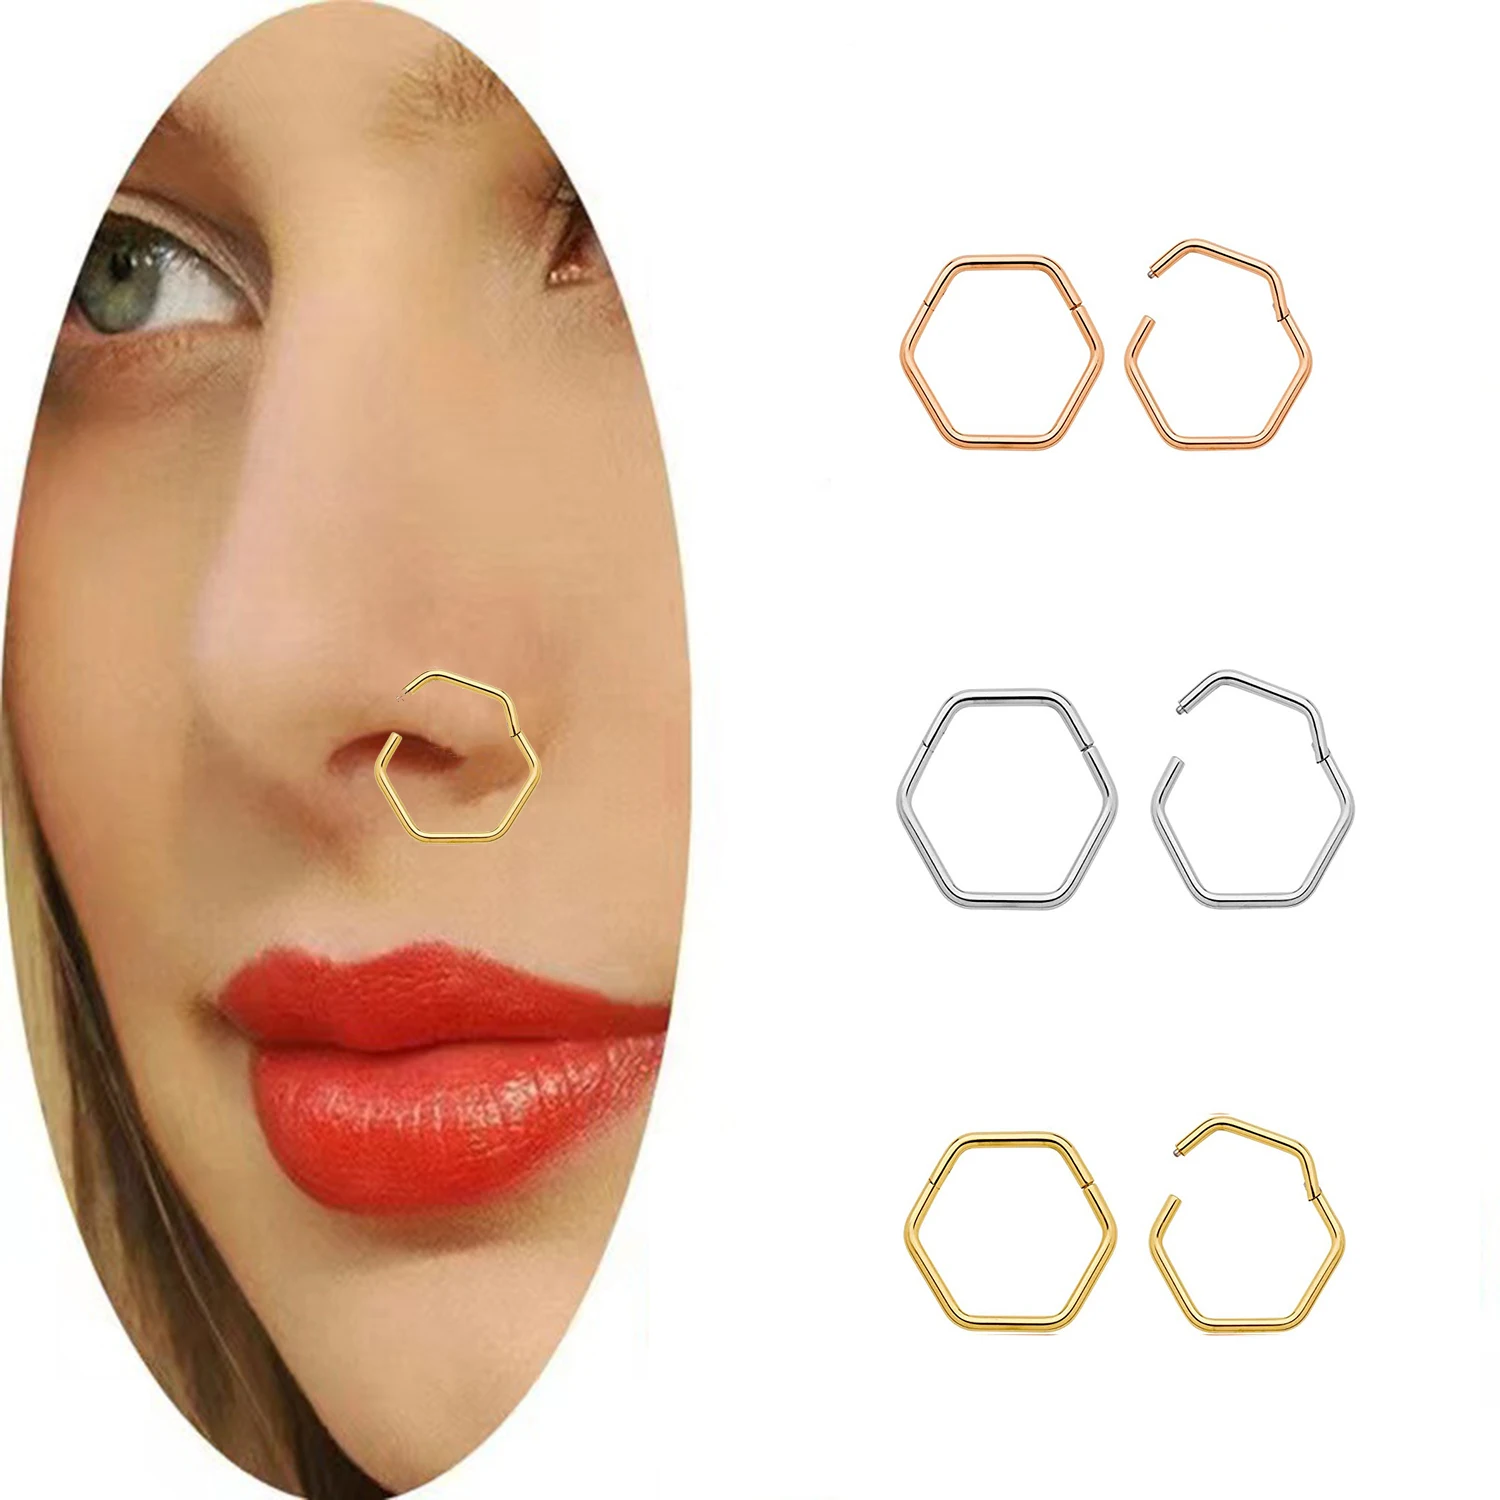 1Pc Hexagonal Nose Ring Open Small Septum Piercing Nose Earrings Women Men Ear Nose Piercing Nose Cuff Clip Body Jewelry